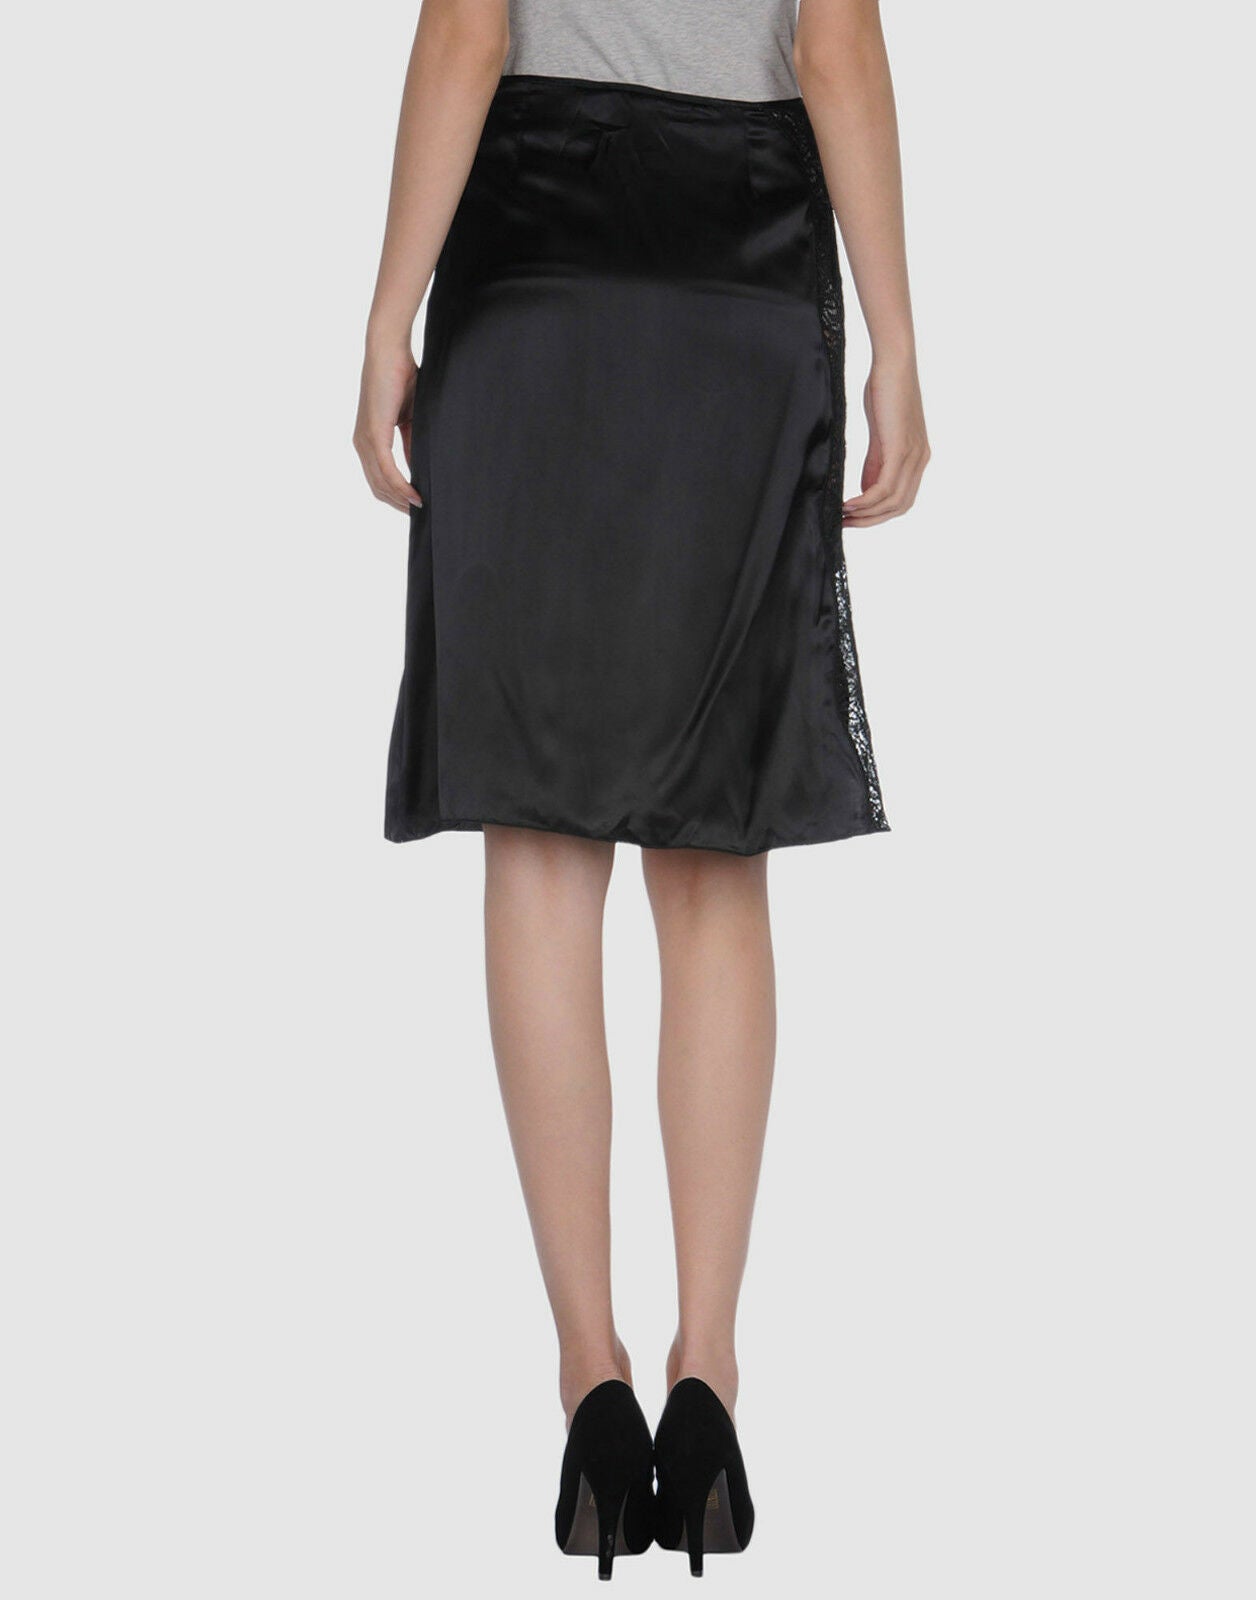 Versace Black Silky Lace Insert Knee Length A Line Skirt 30 44 NWT